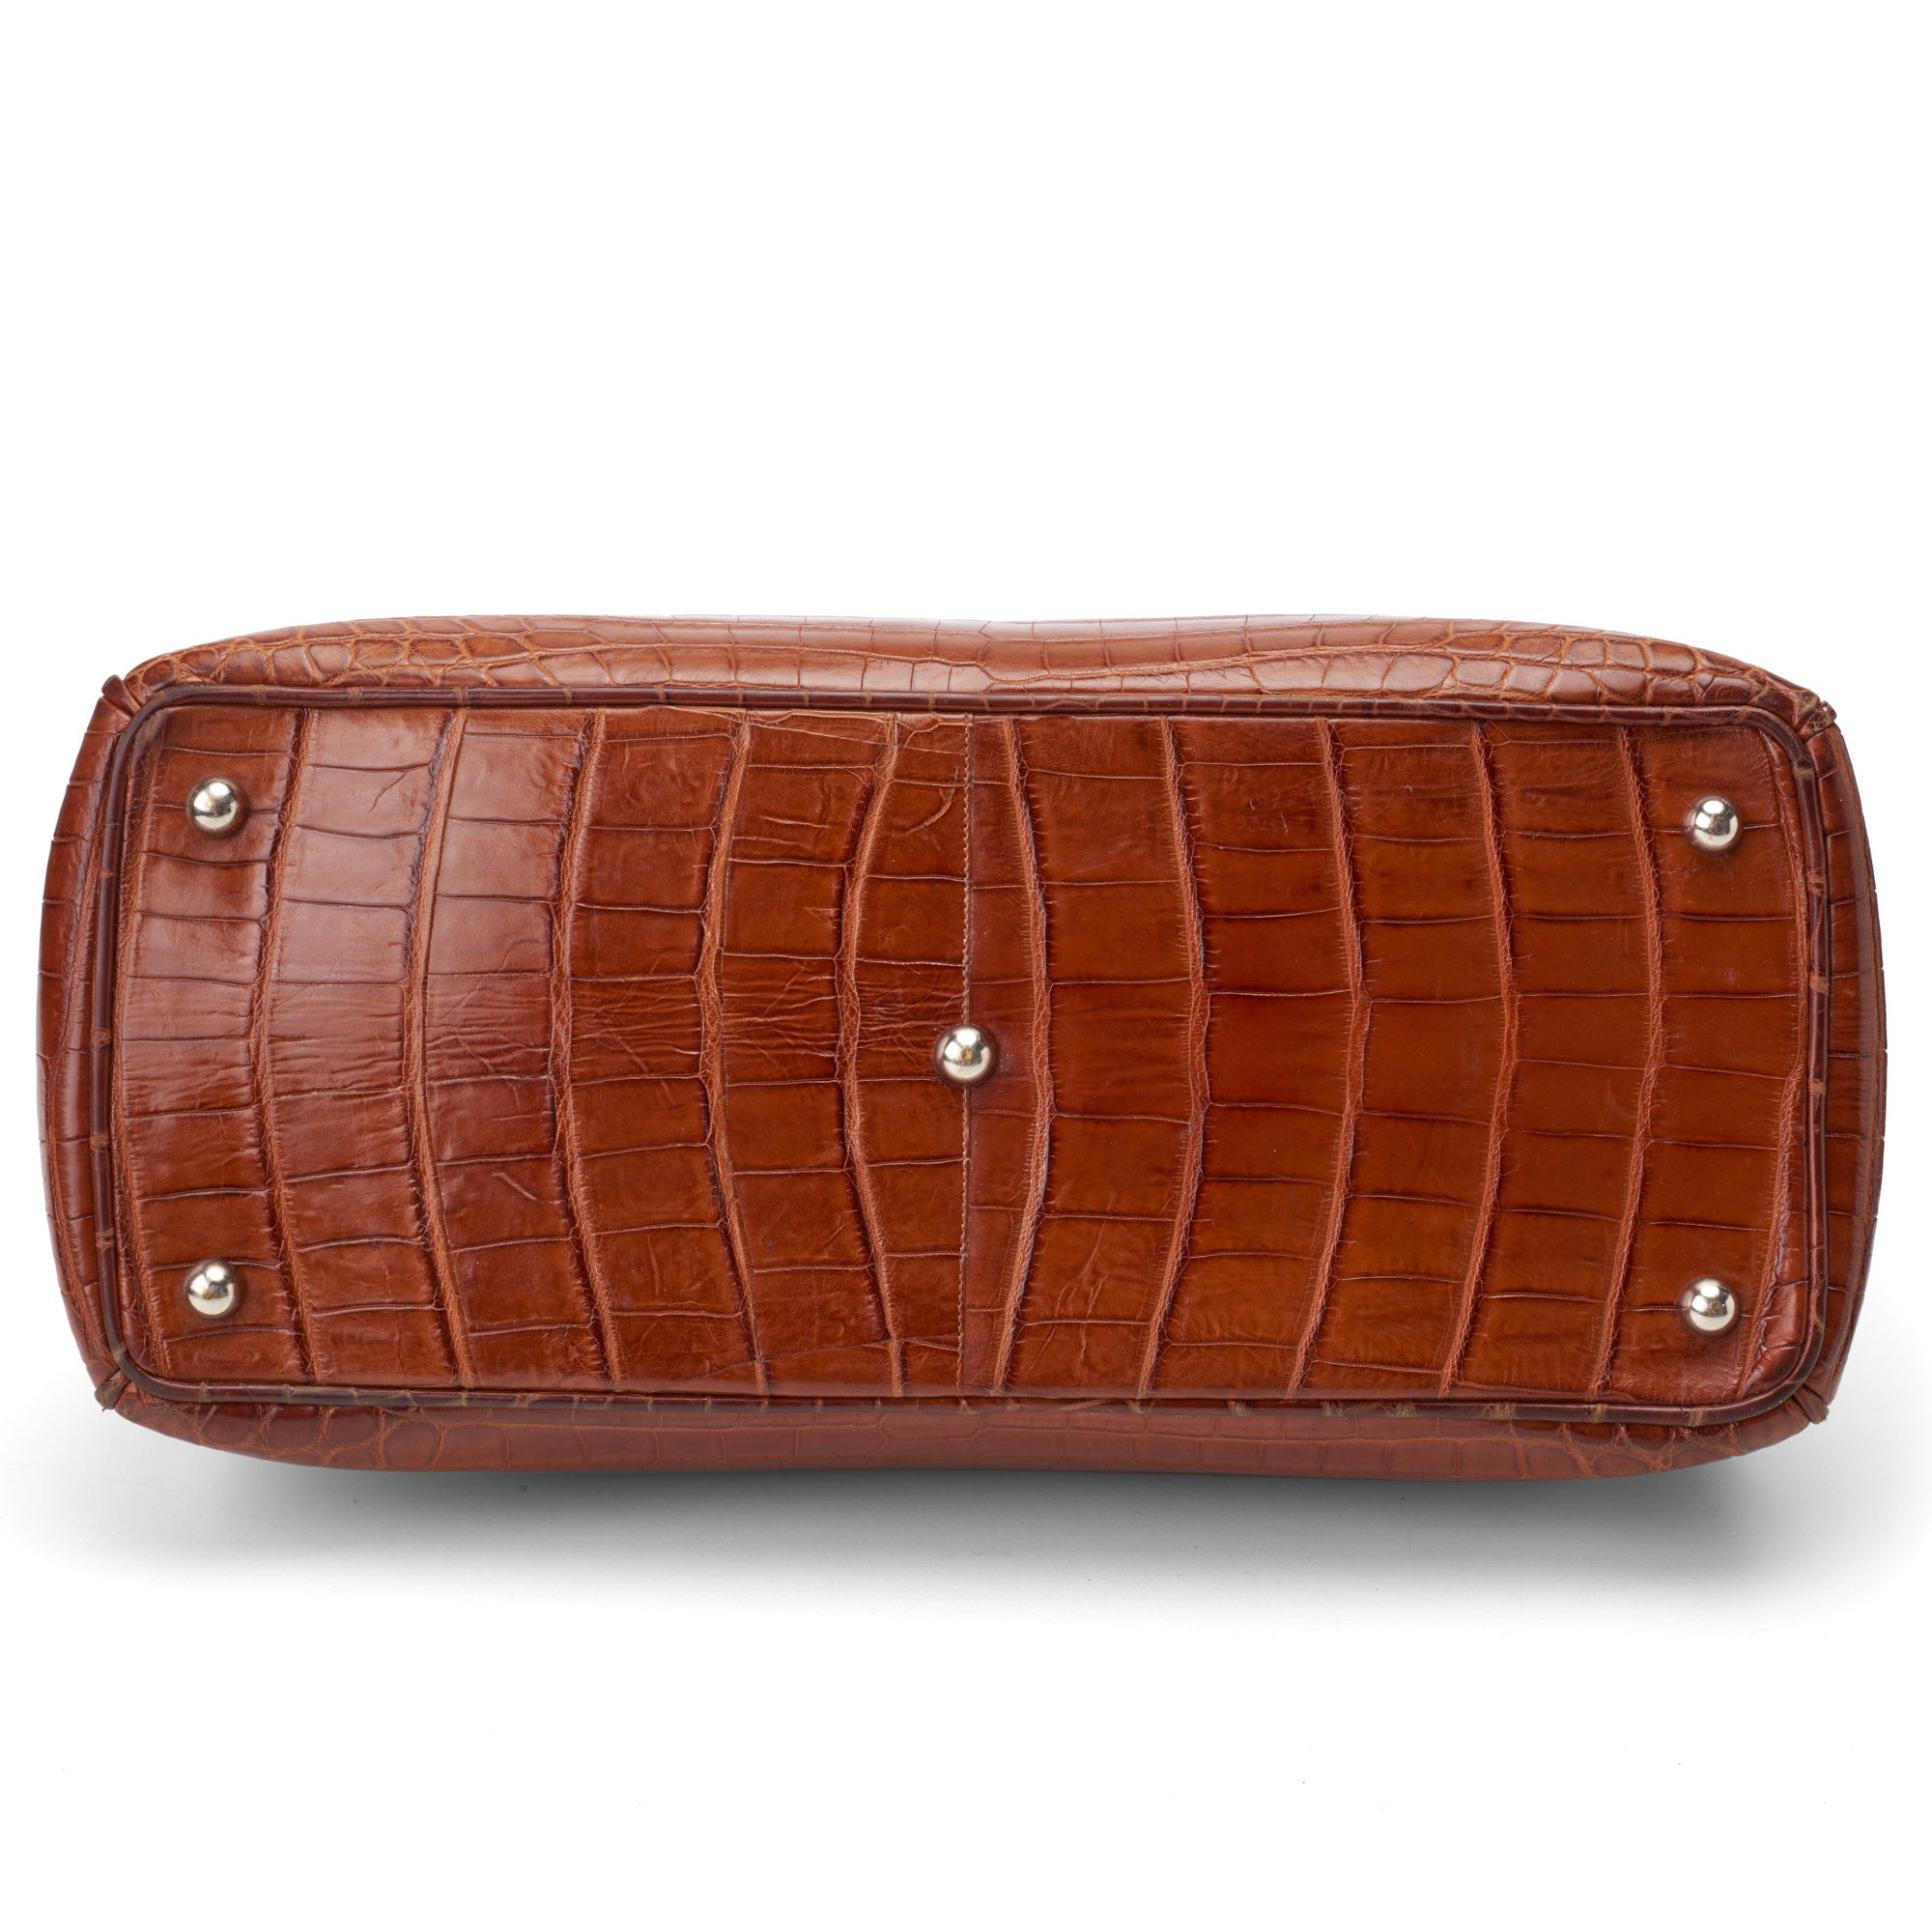 VIA LA MODA Cognac Genuine Nile Crocodile Leather Birkin 35 Style Handbag WOMEN'S BOUTIQUE